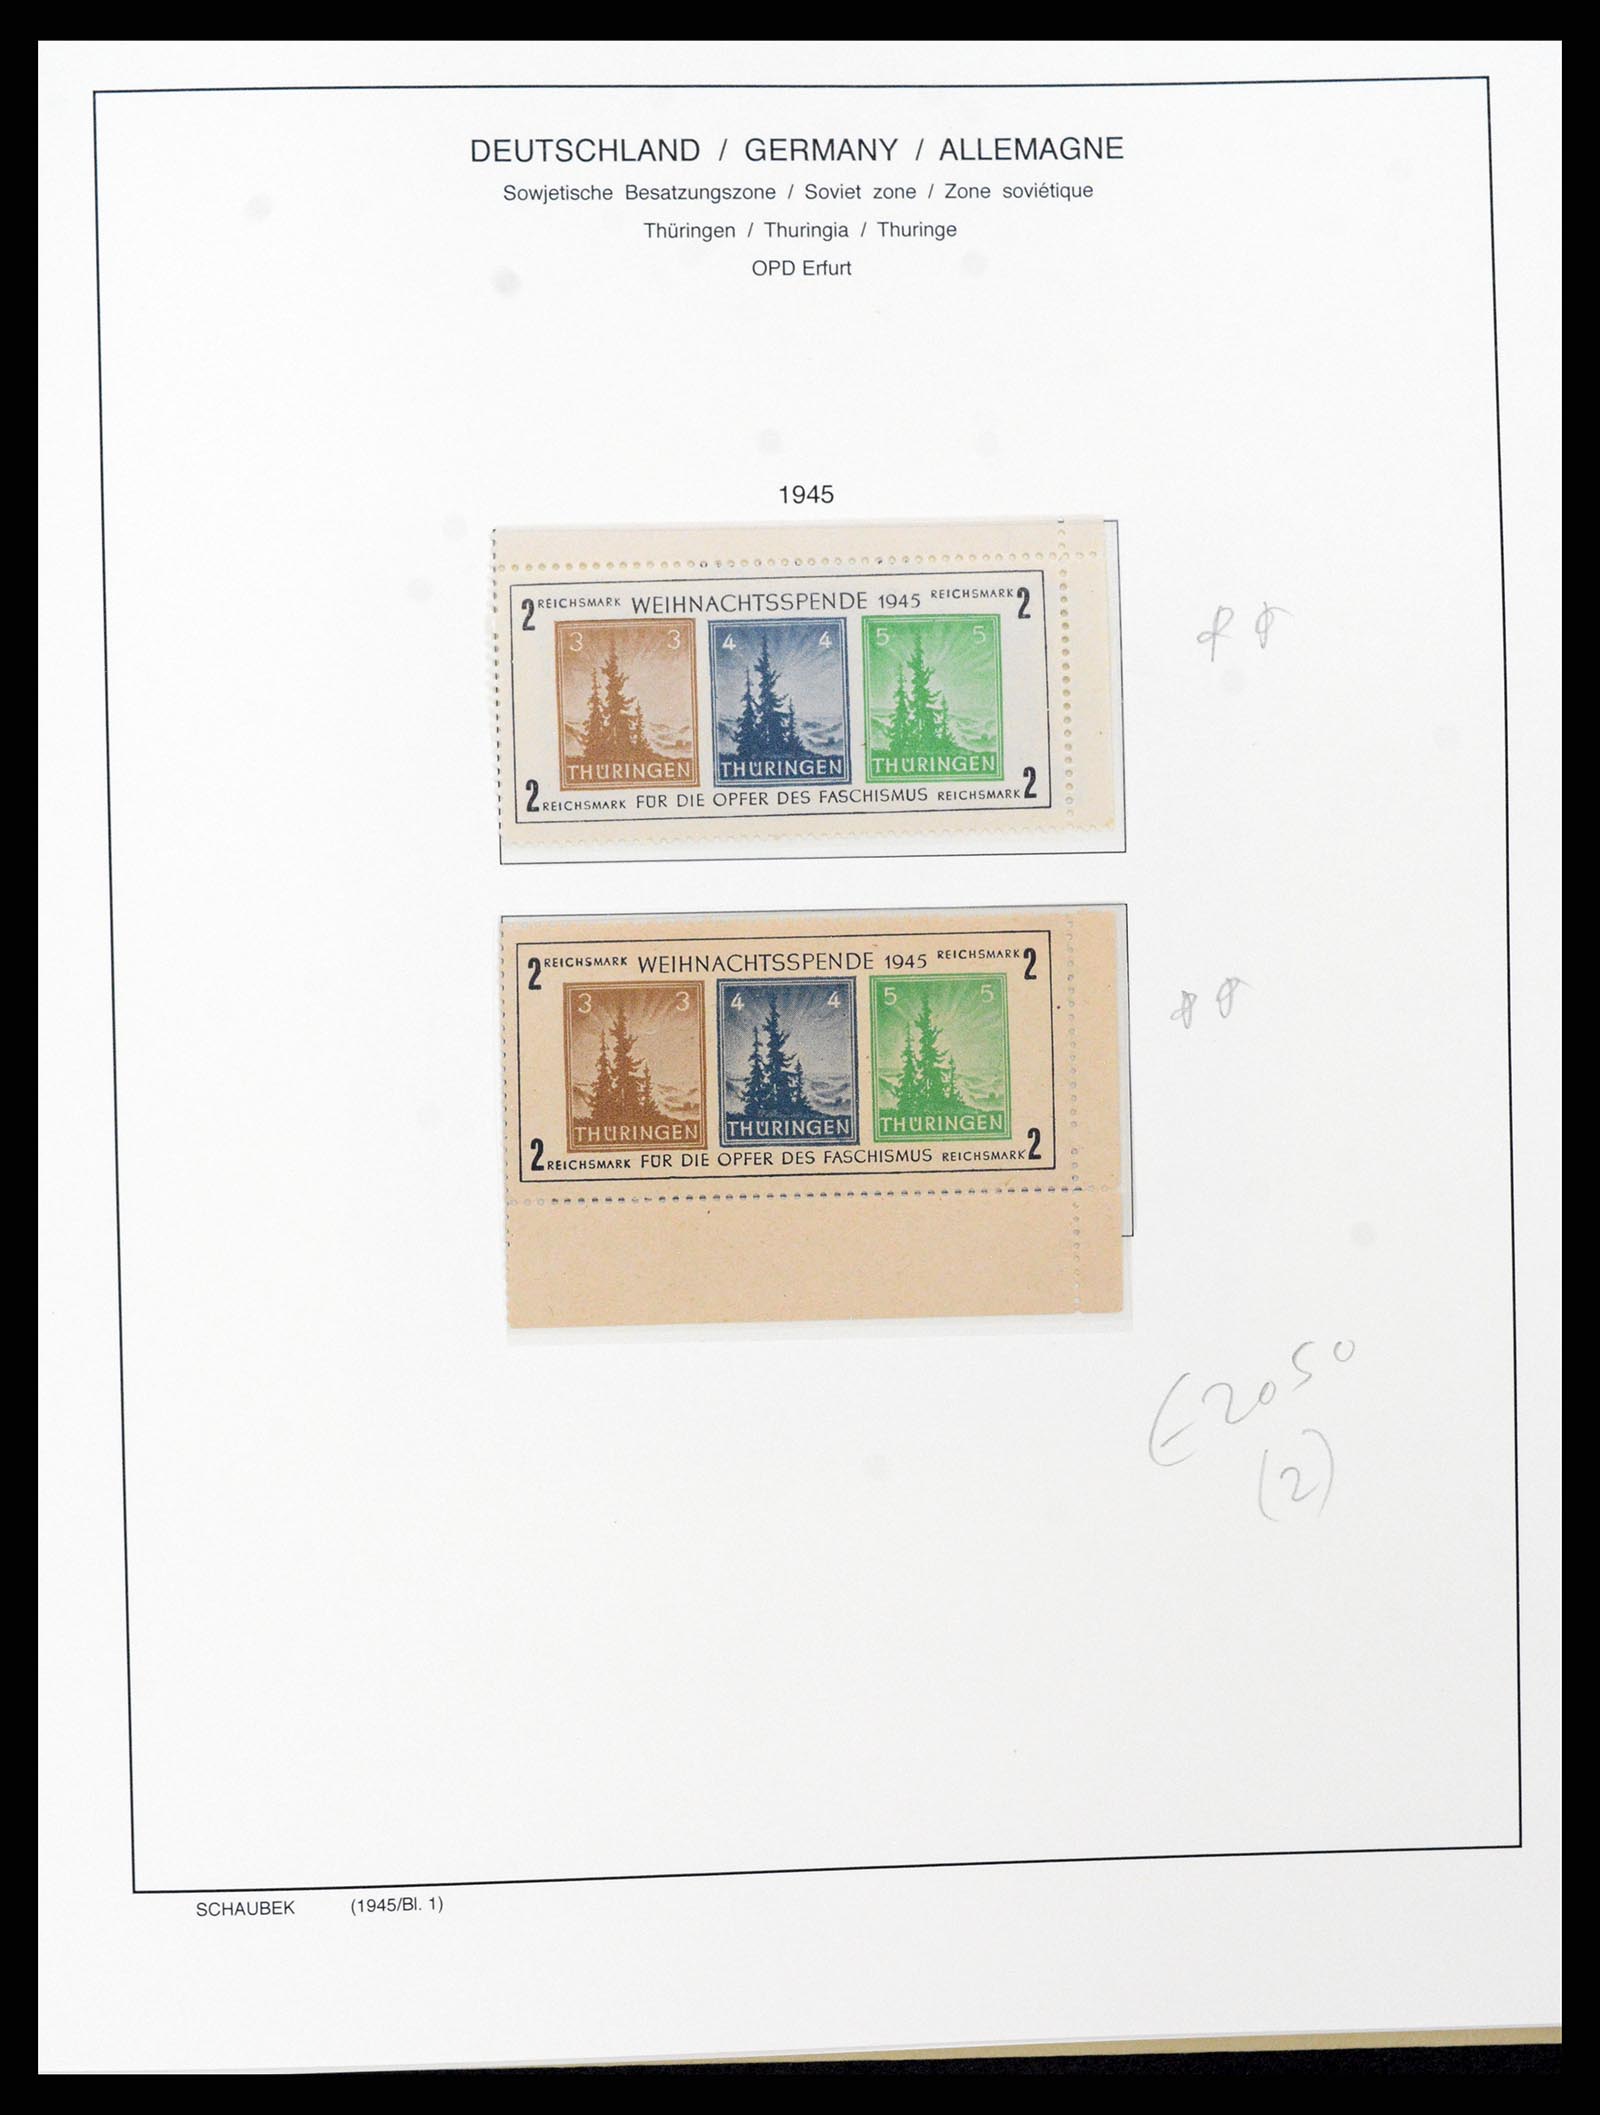 37645 032 - Stamp collection 37645 German Zones 1945-1949.